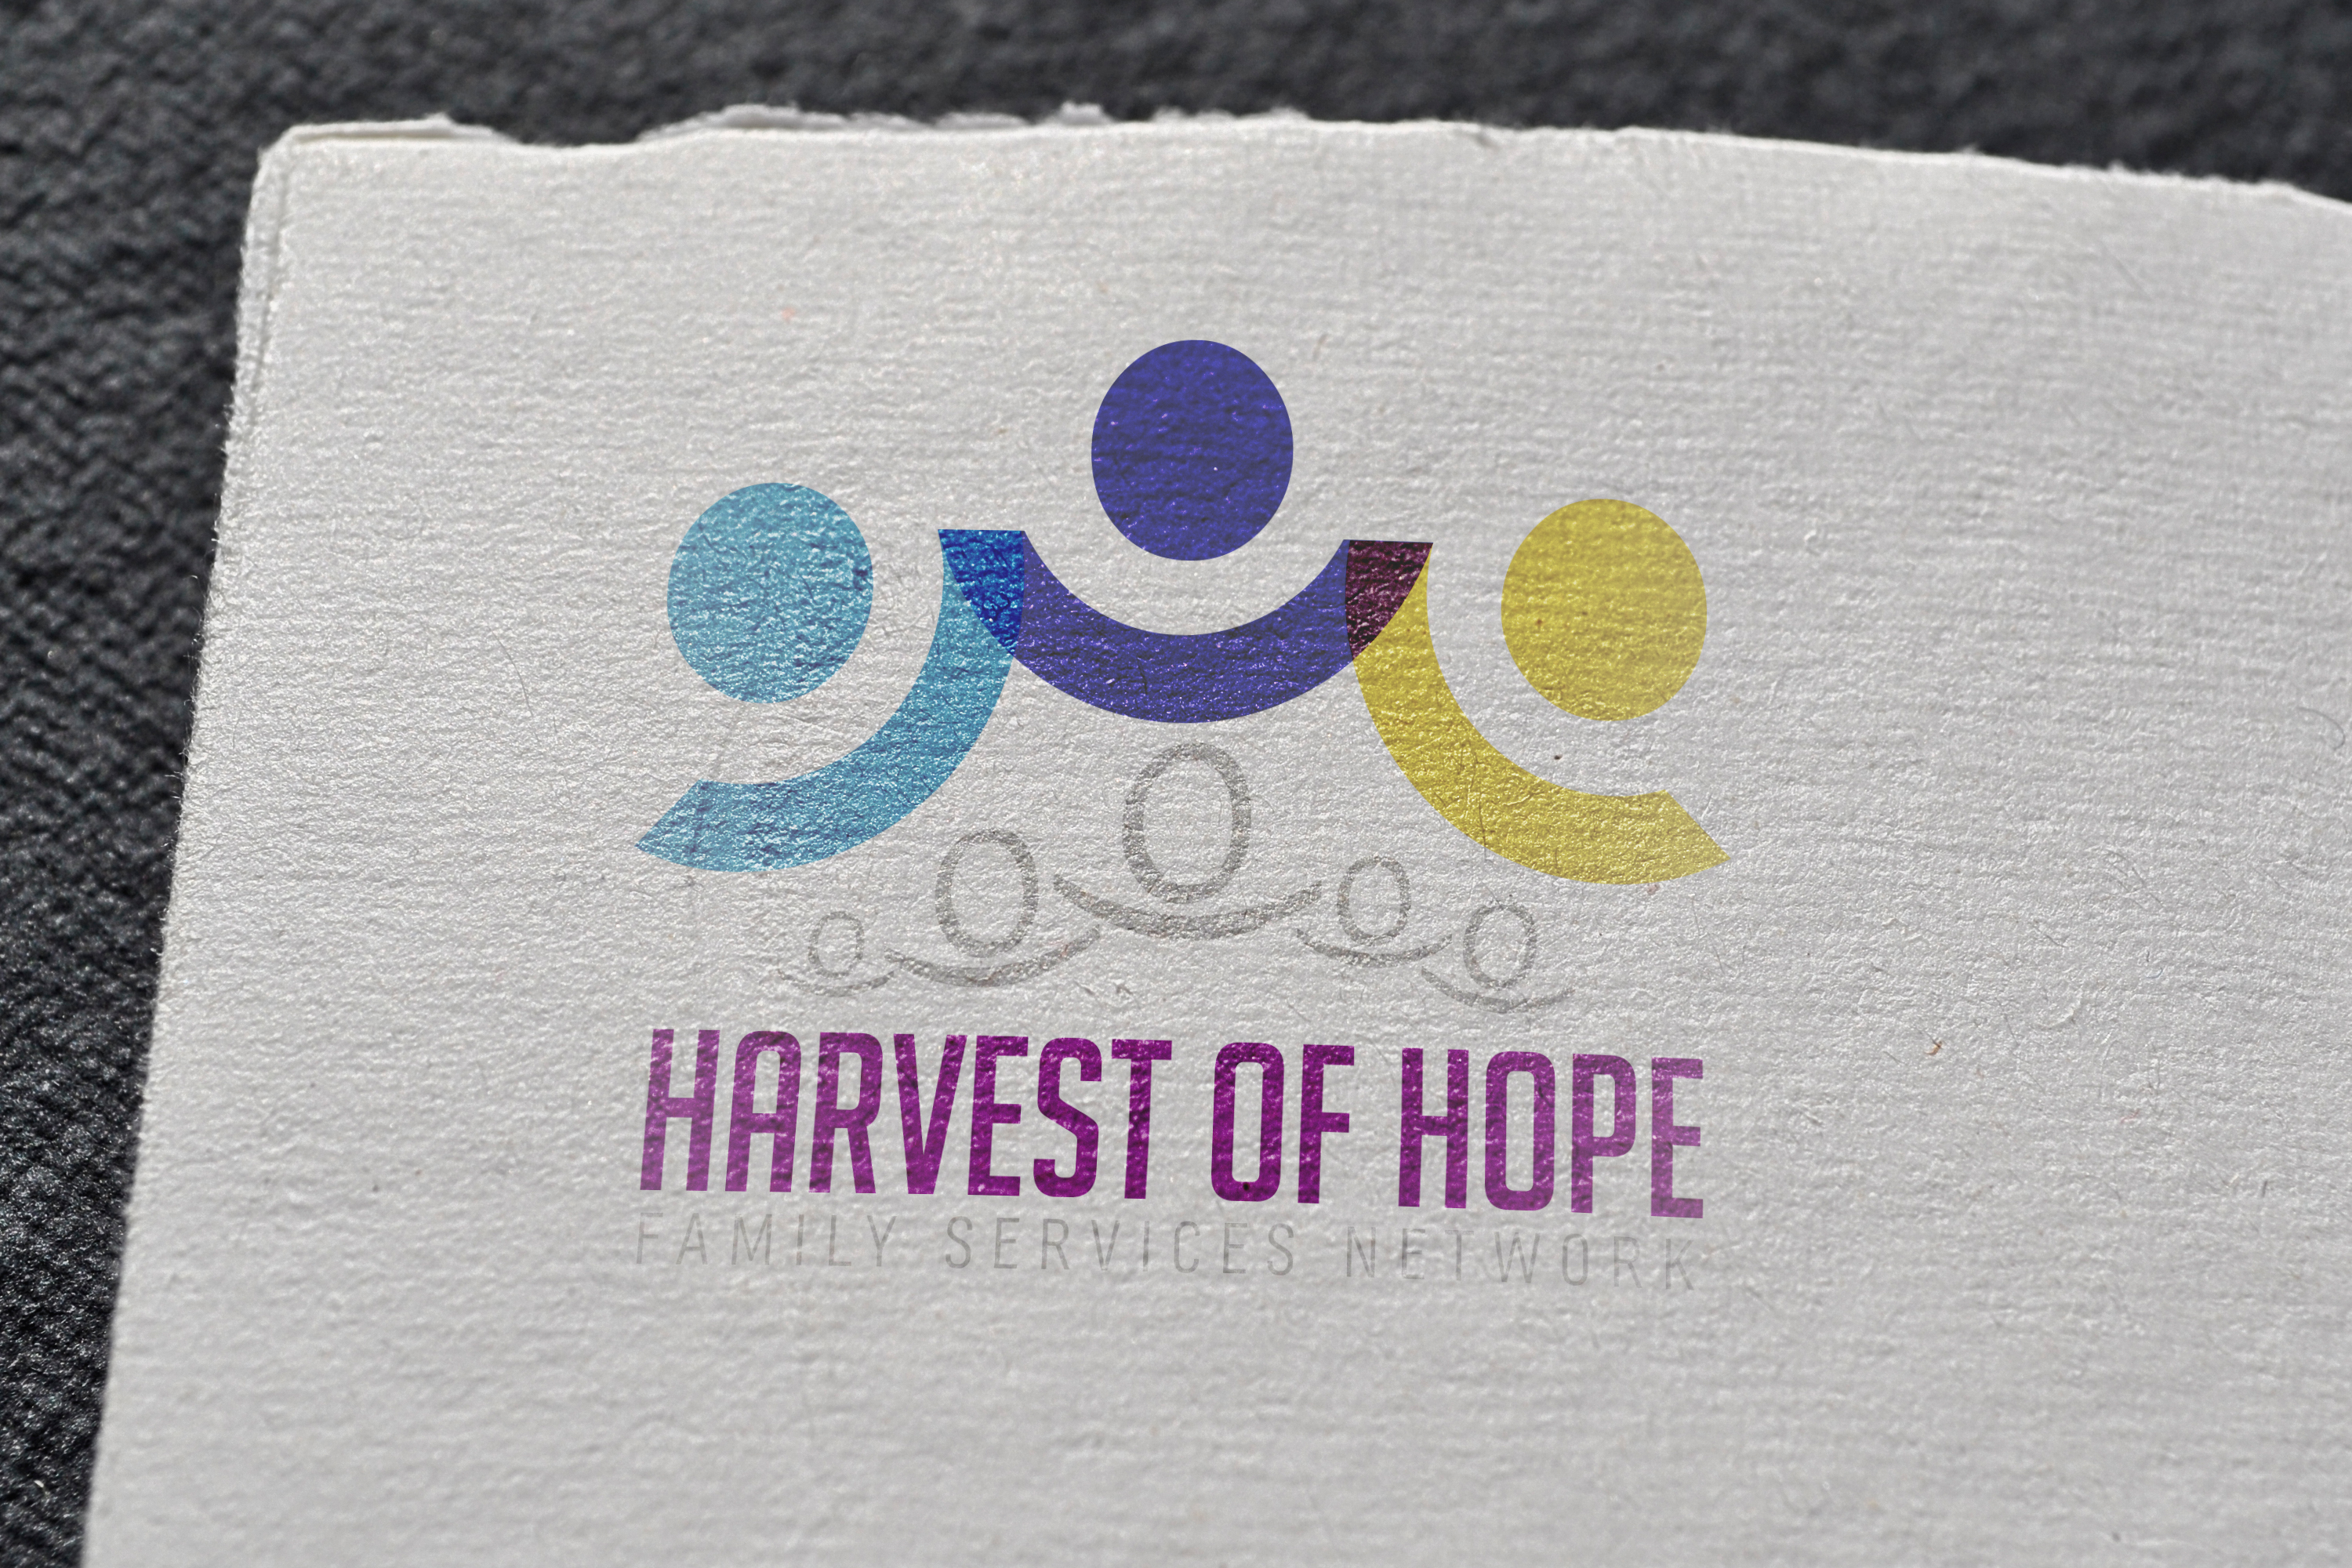 Brand Identity - Mockup: Harvest of Hope